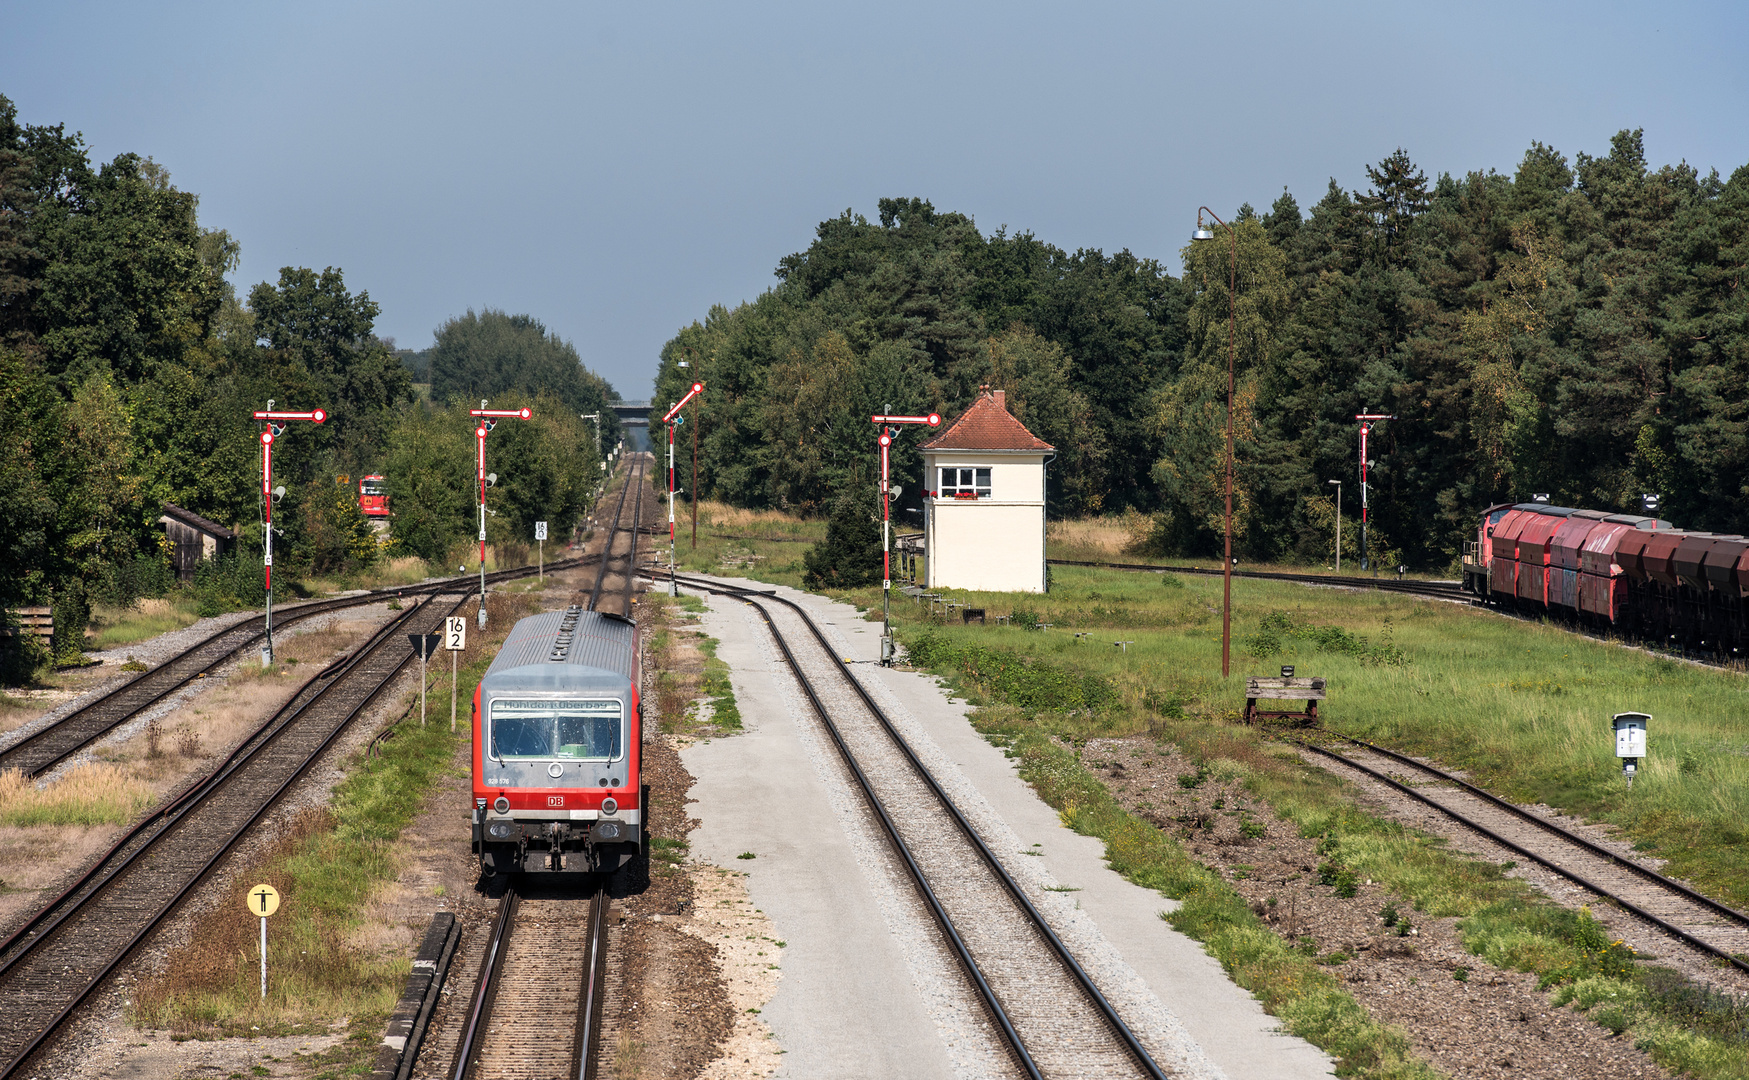 Variante 1 zu "Nordkopf Bahnhof Garching" 